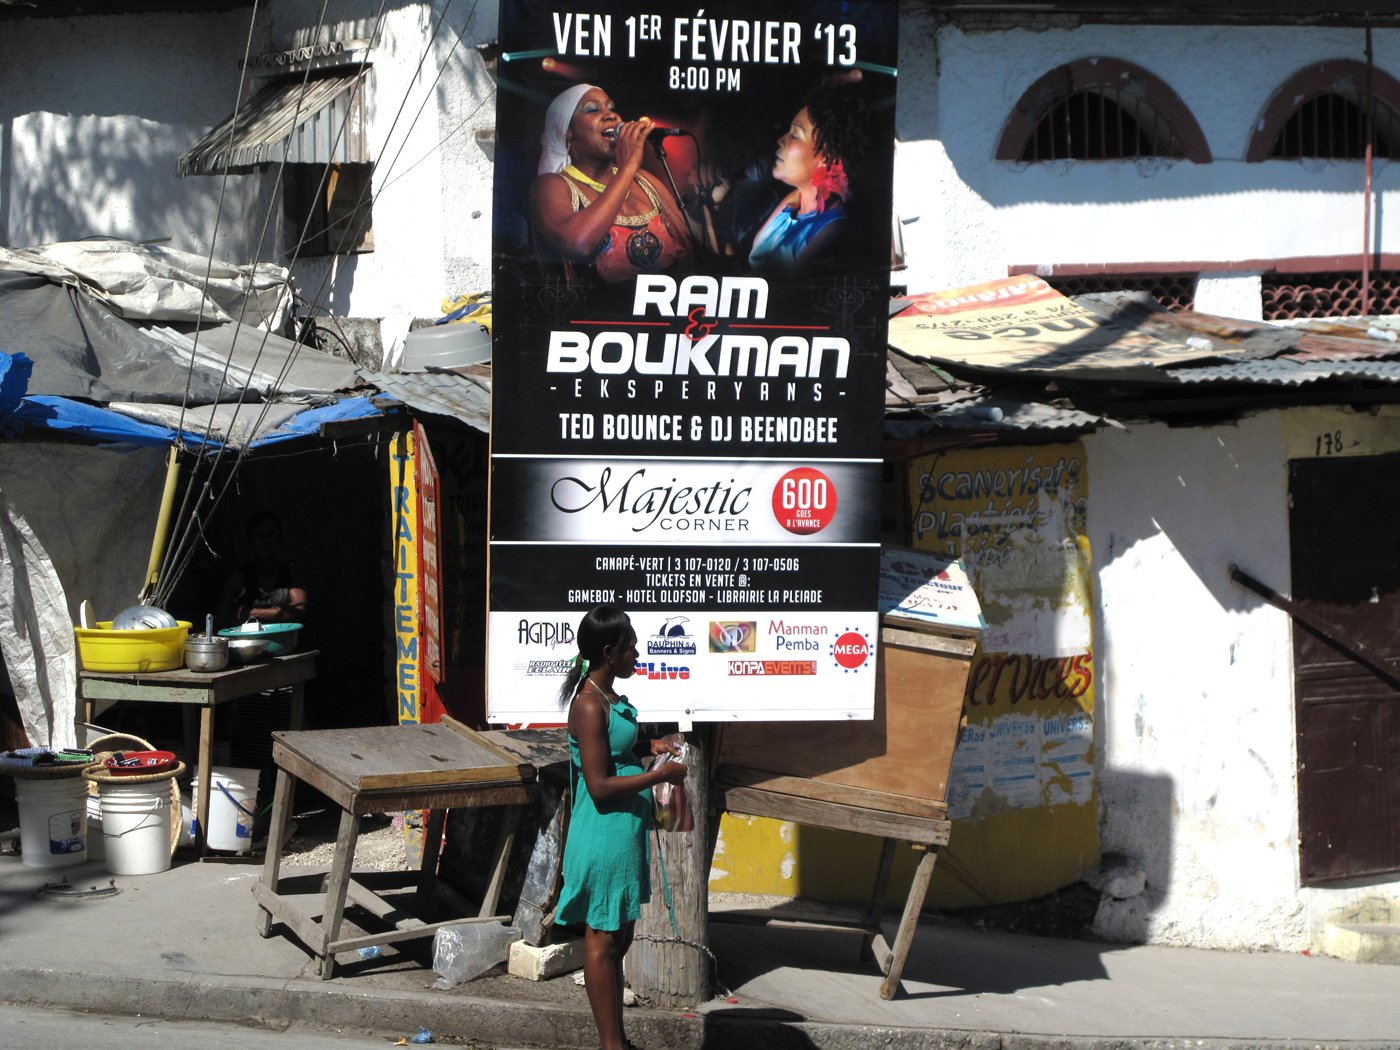 After the Quake: Music, Politics and Spirituality in Haiti